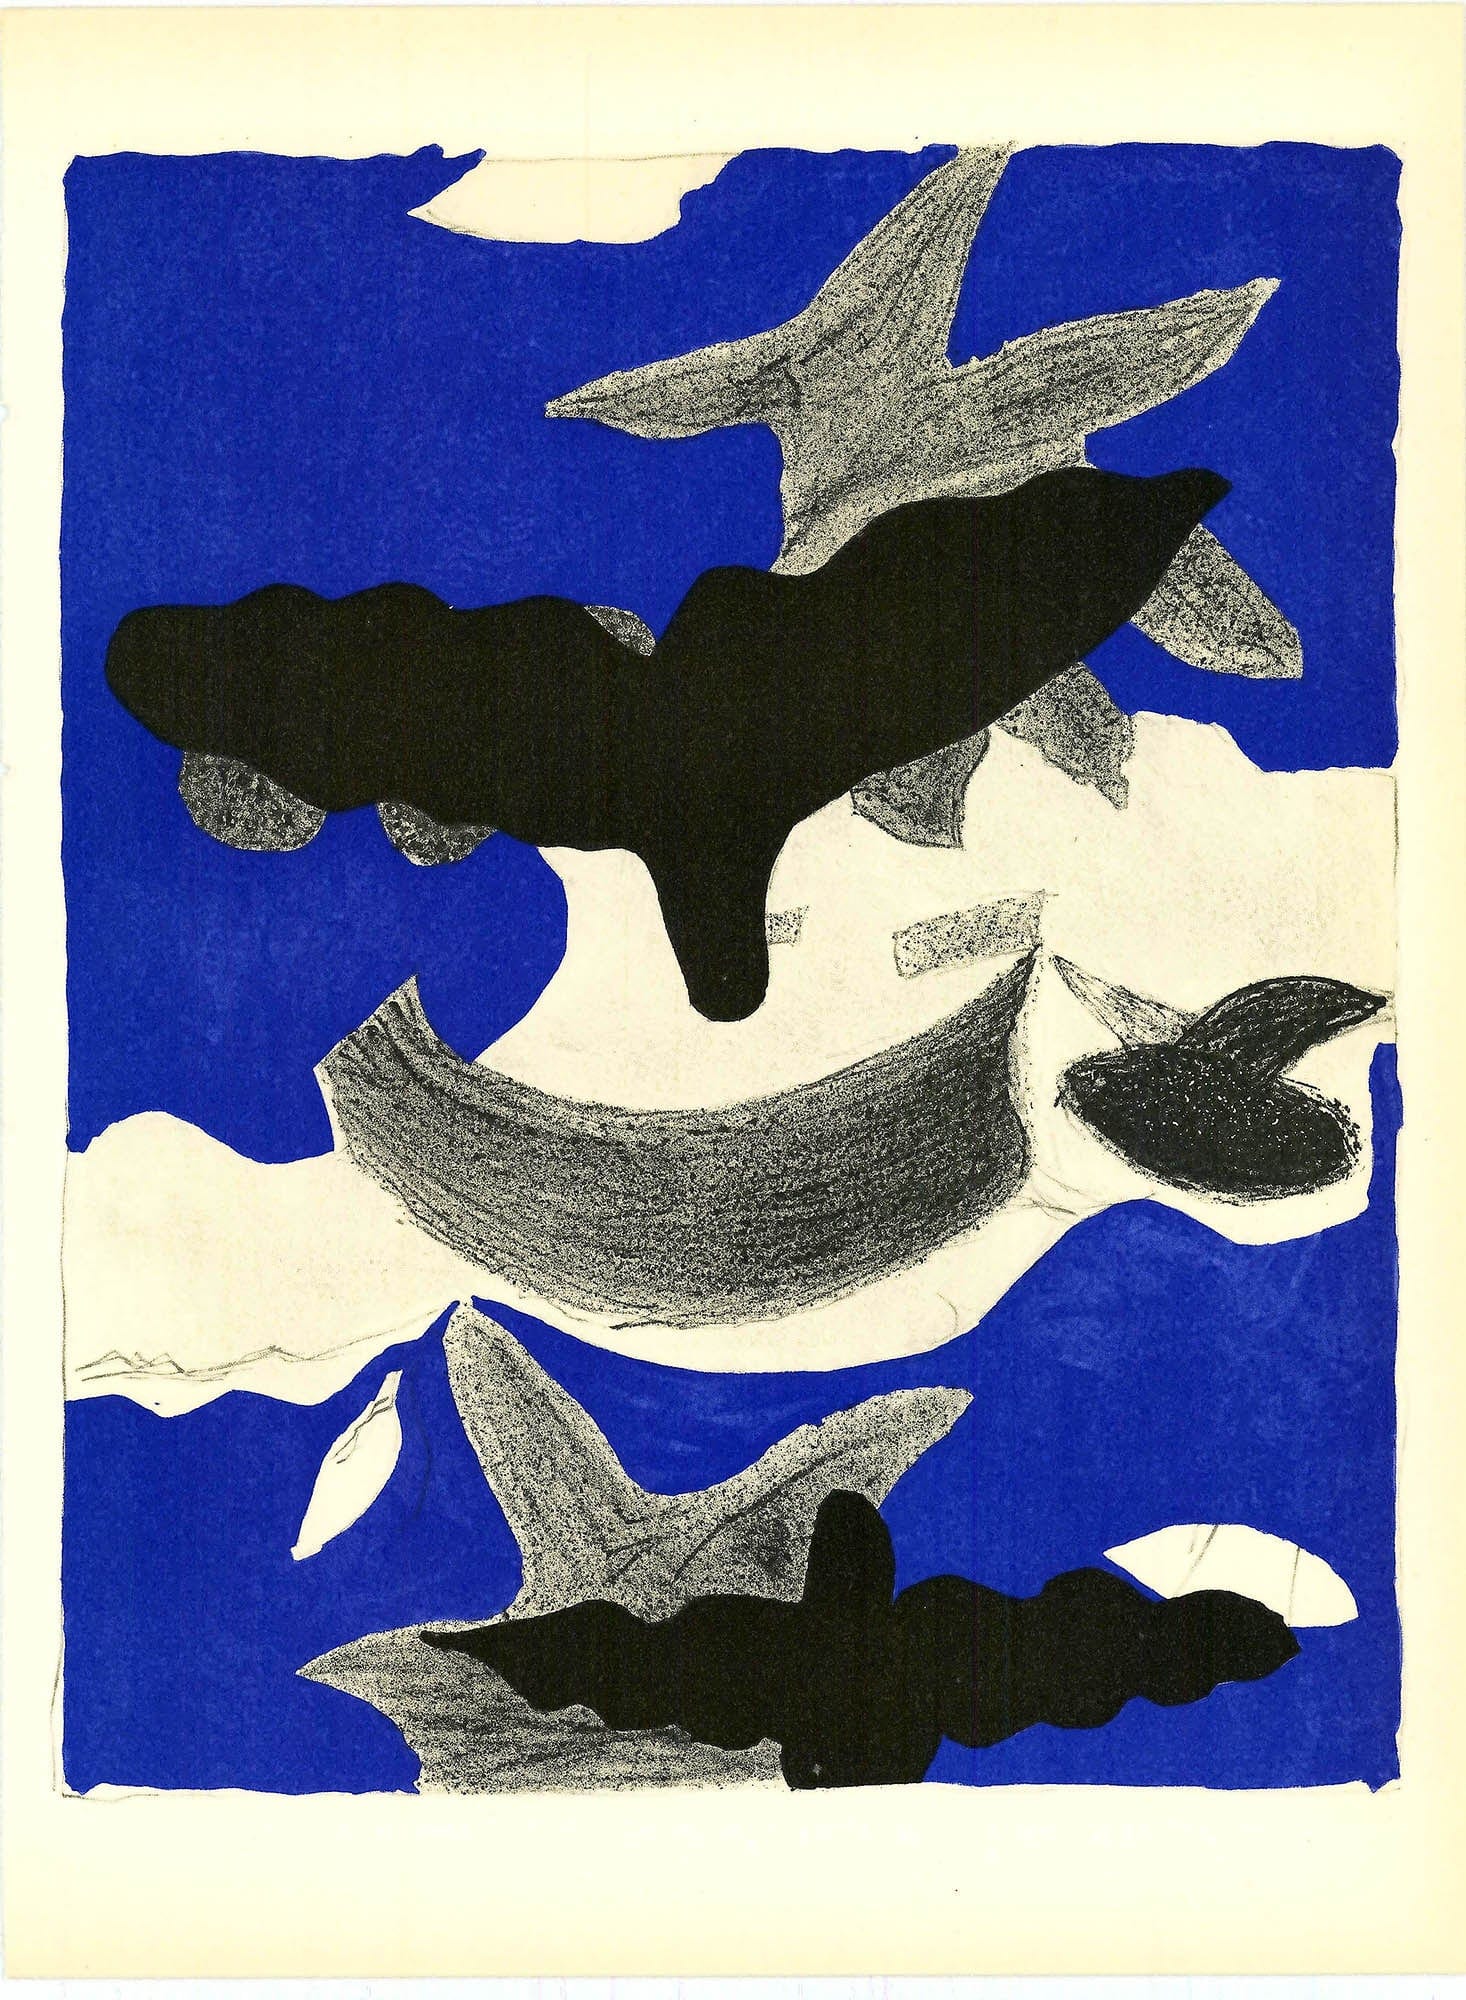 Georges Braque, "Untitled XI" ZOOM Vol. 8 No. 31 ET 32 verve lithograph